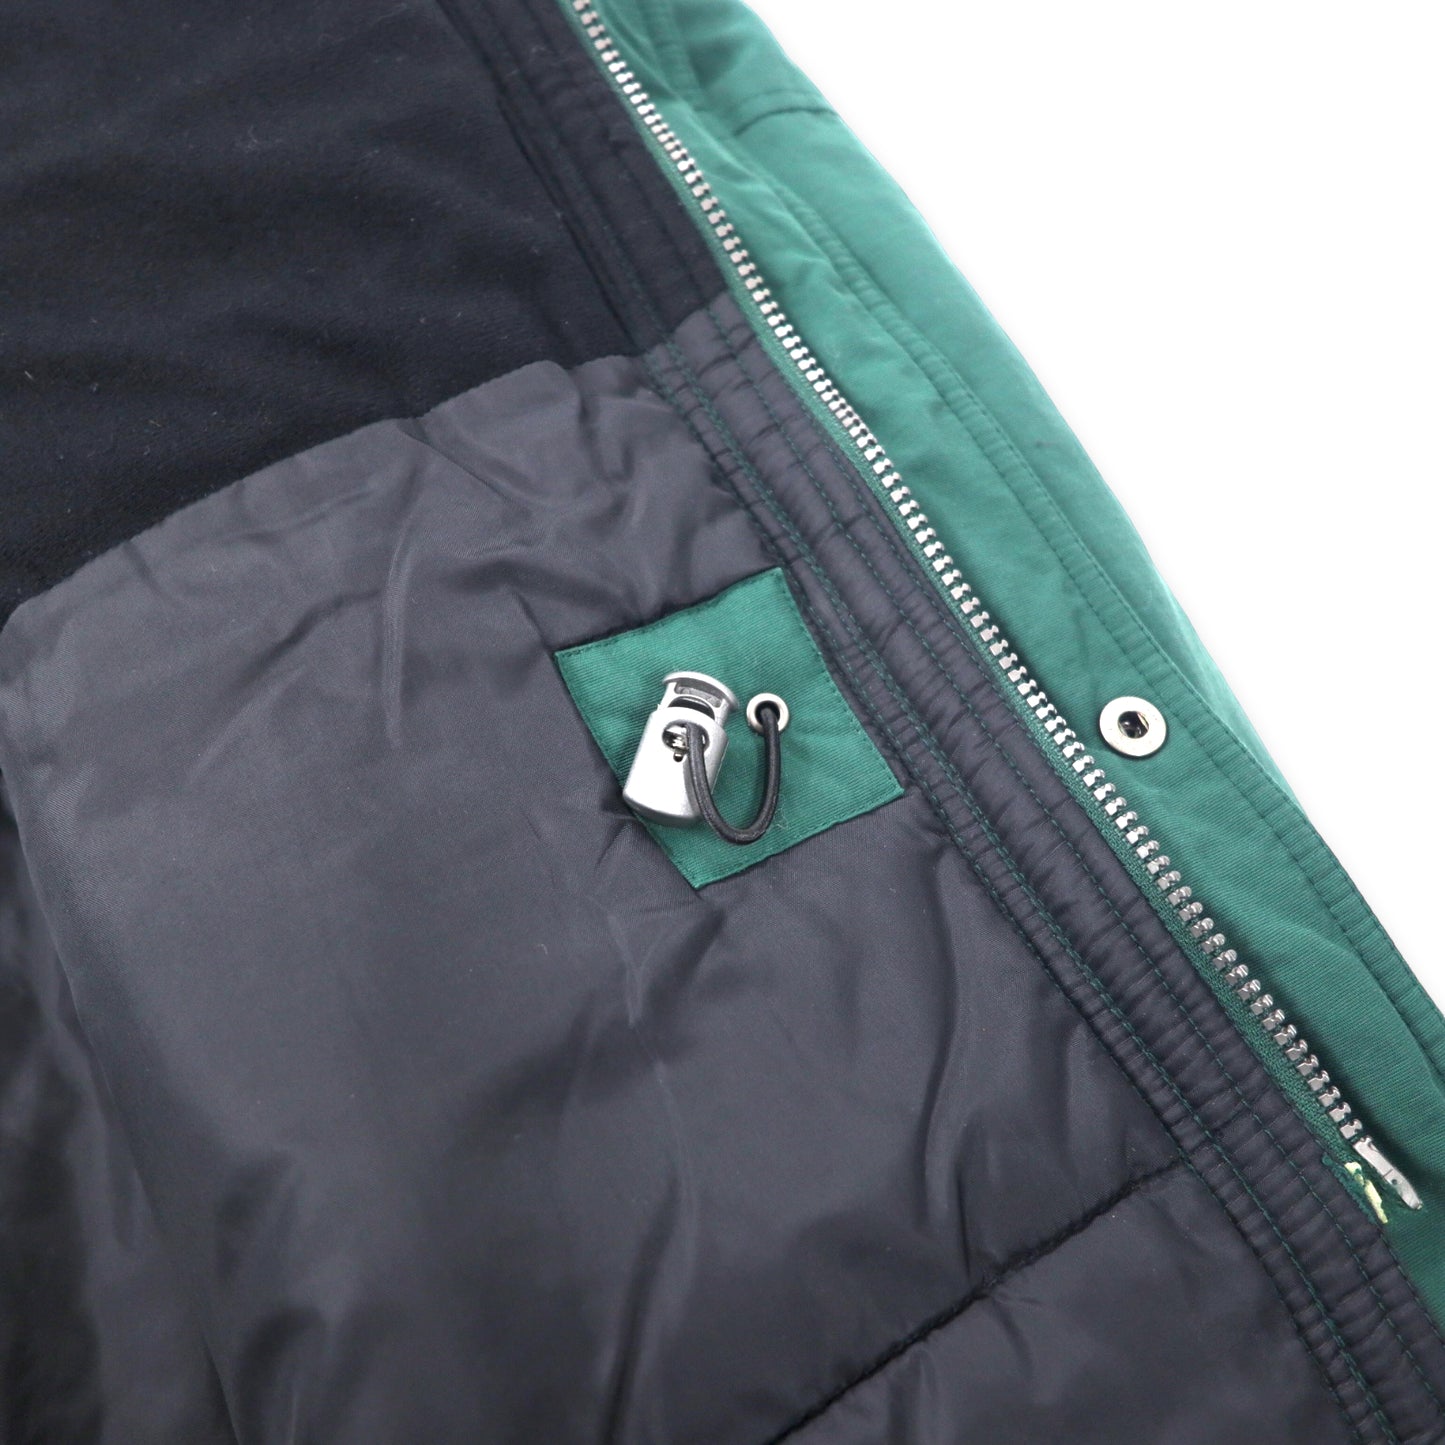 FIELD & STREAM 90年代 マウンテンパーカー セーリングジャケット 中綿 L グリーン ポリエステル ドローコード フード収納式 ビッグサイズ